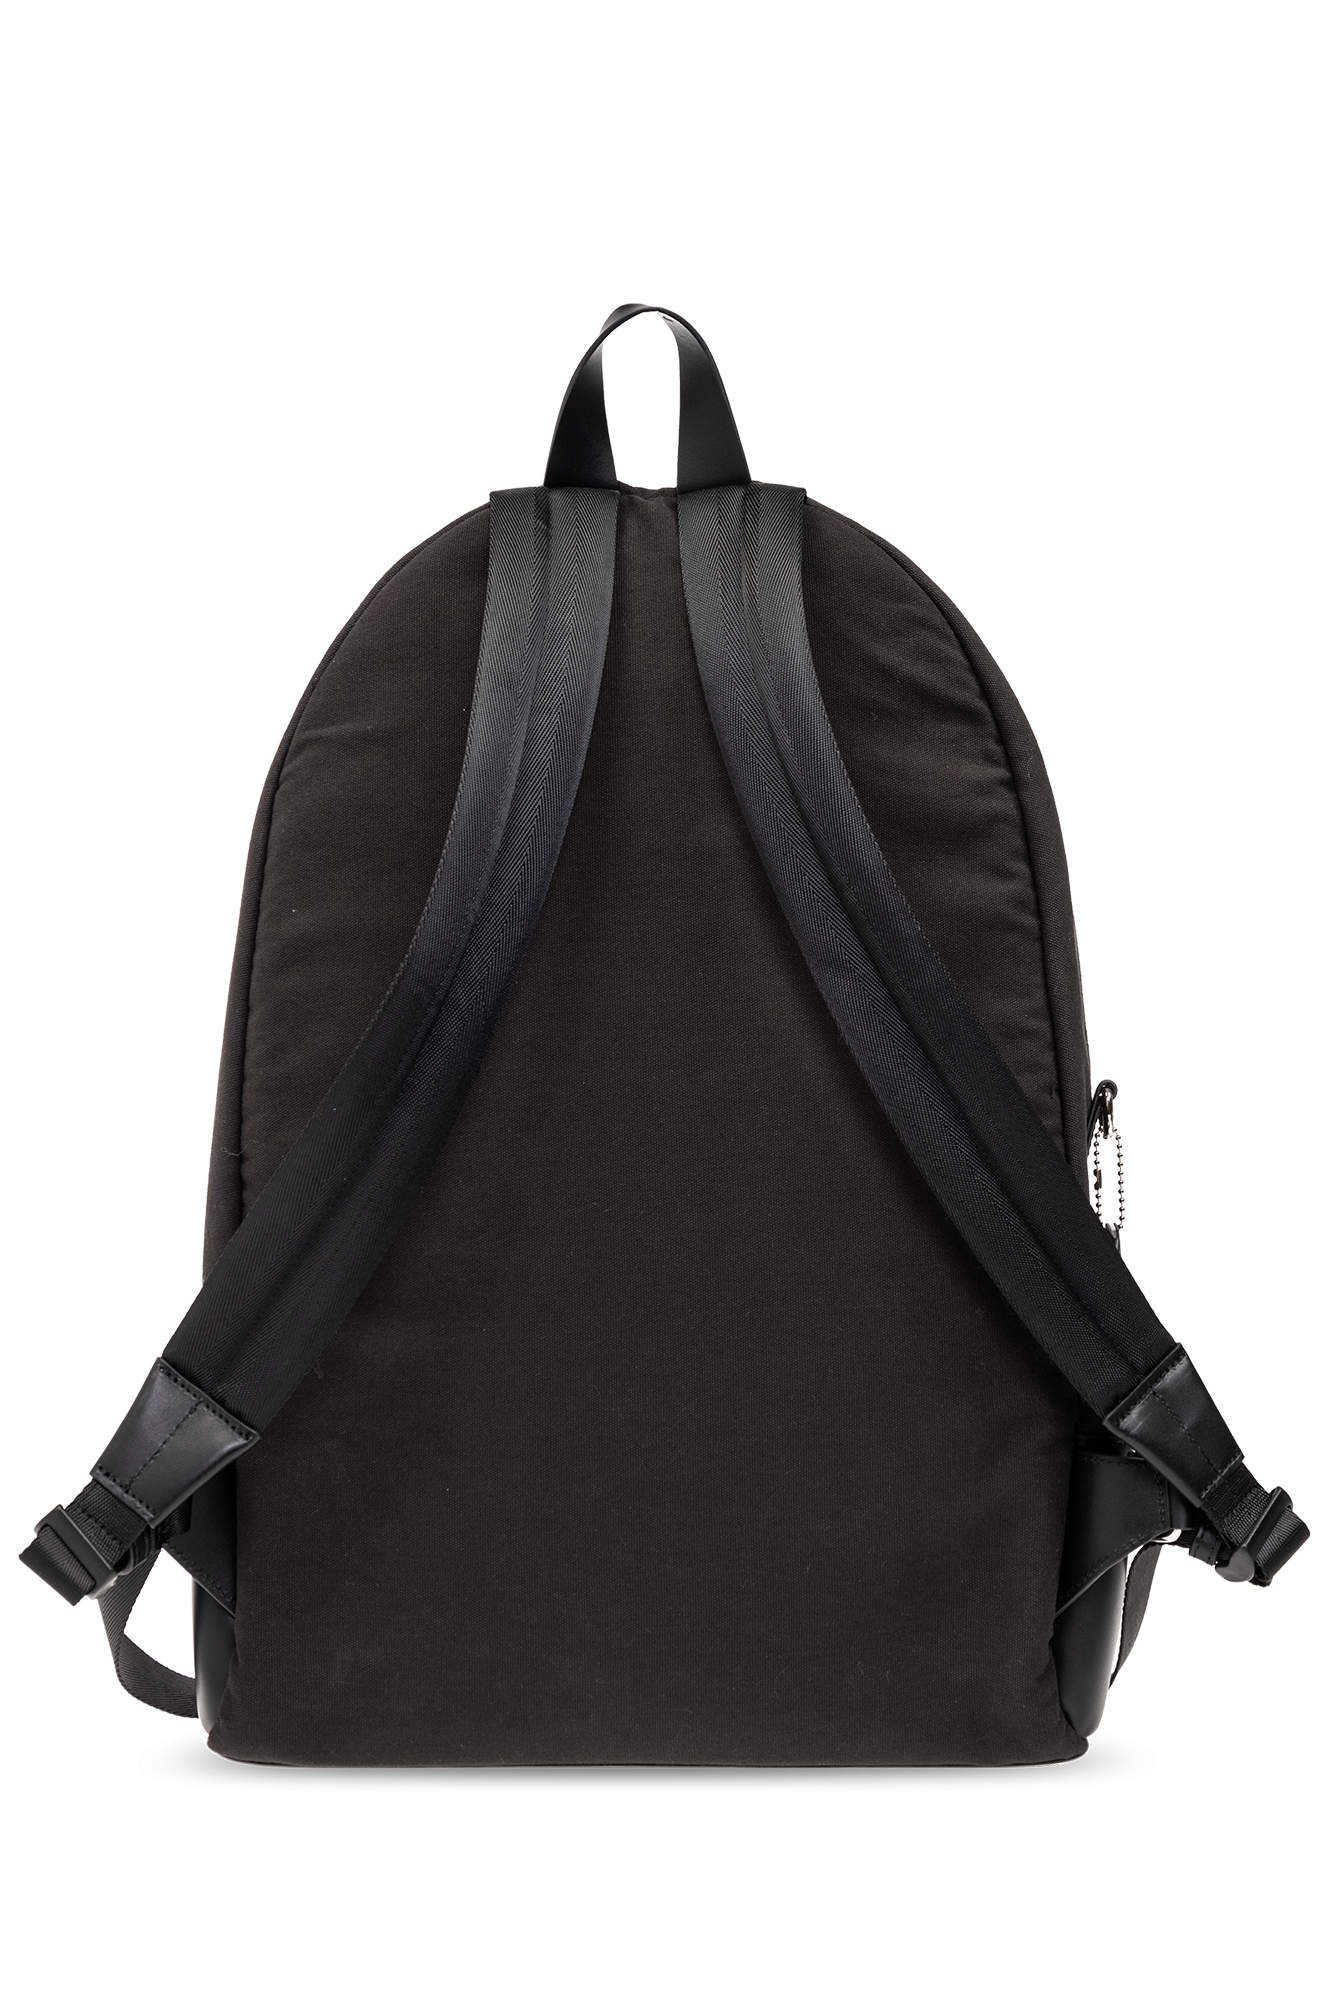 A.P.C. ‘Sense’ backpack